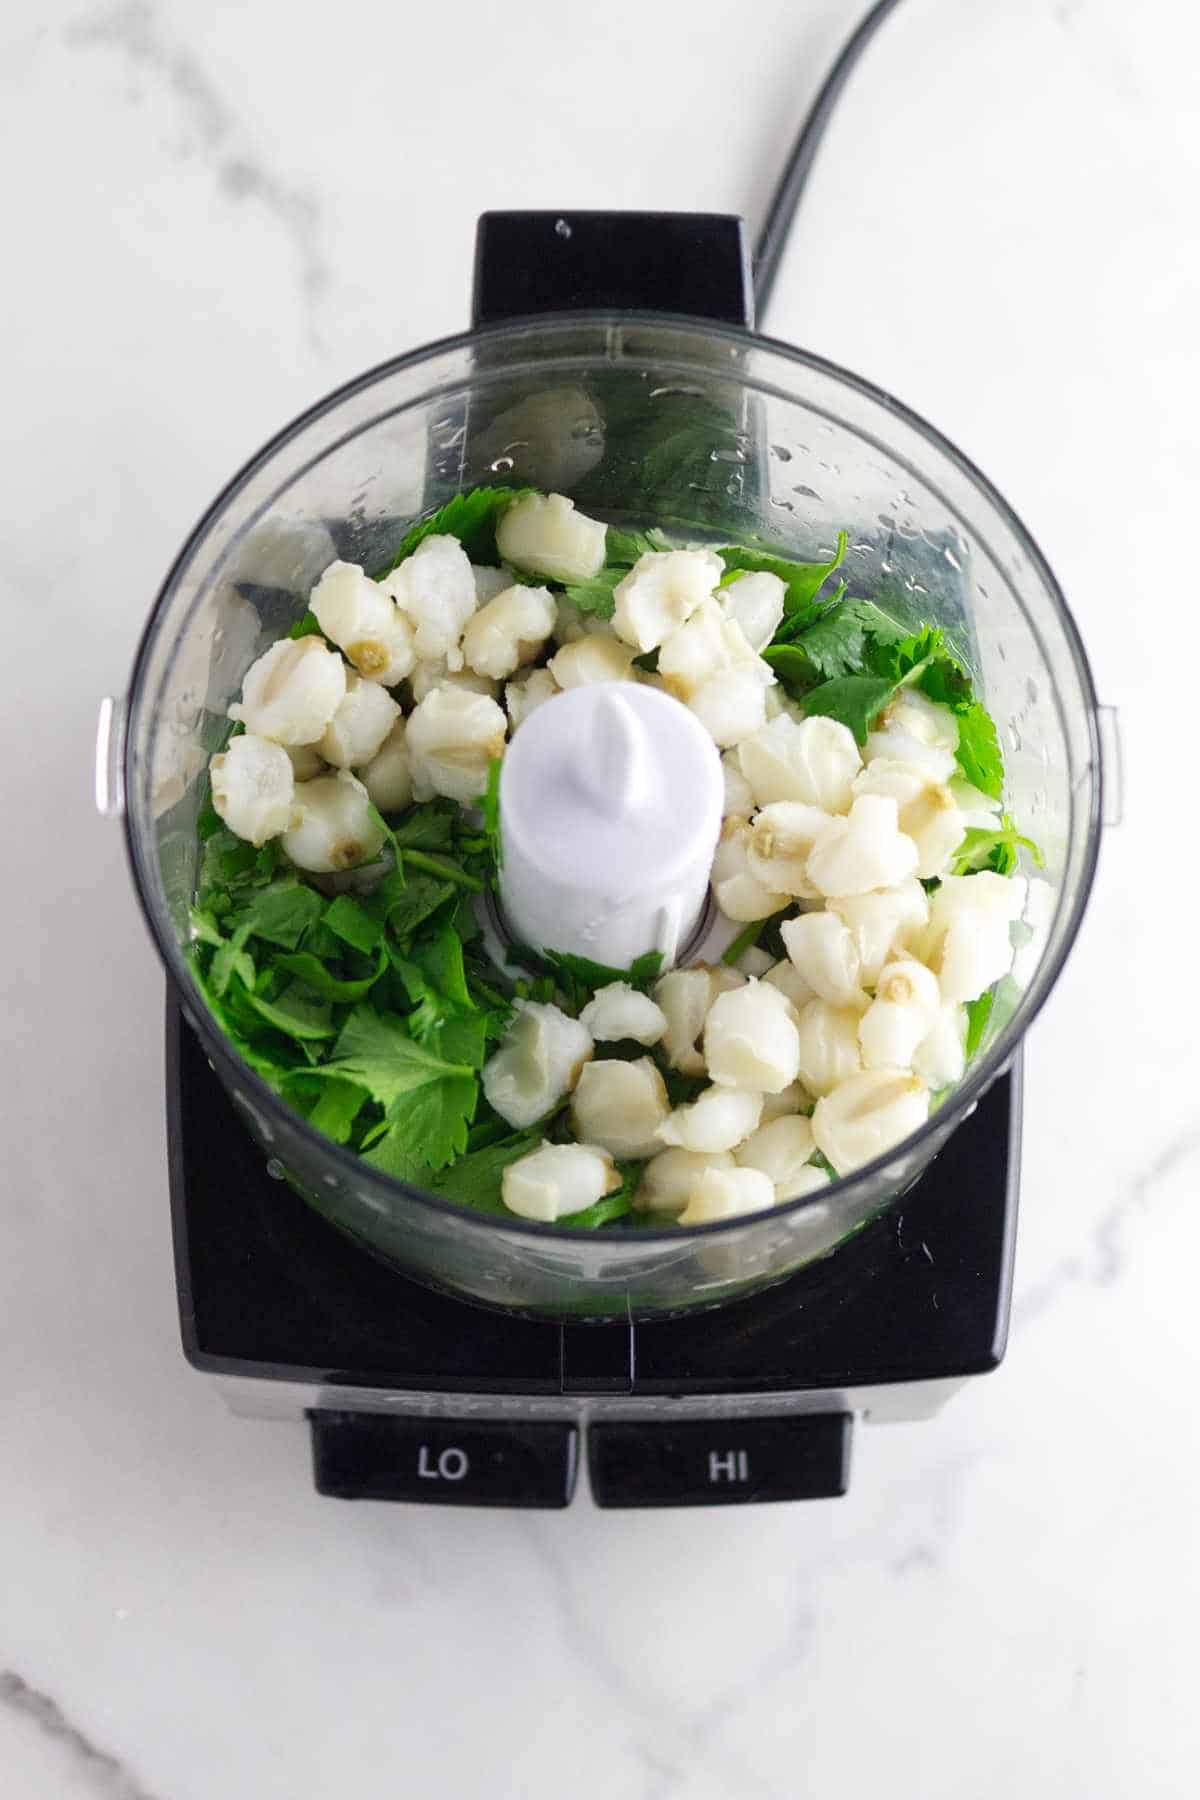 hominy and cilantro in a mini food processor.